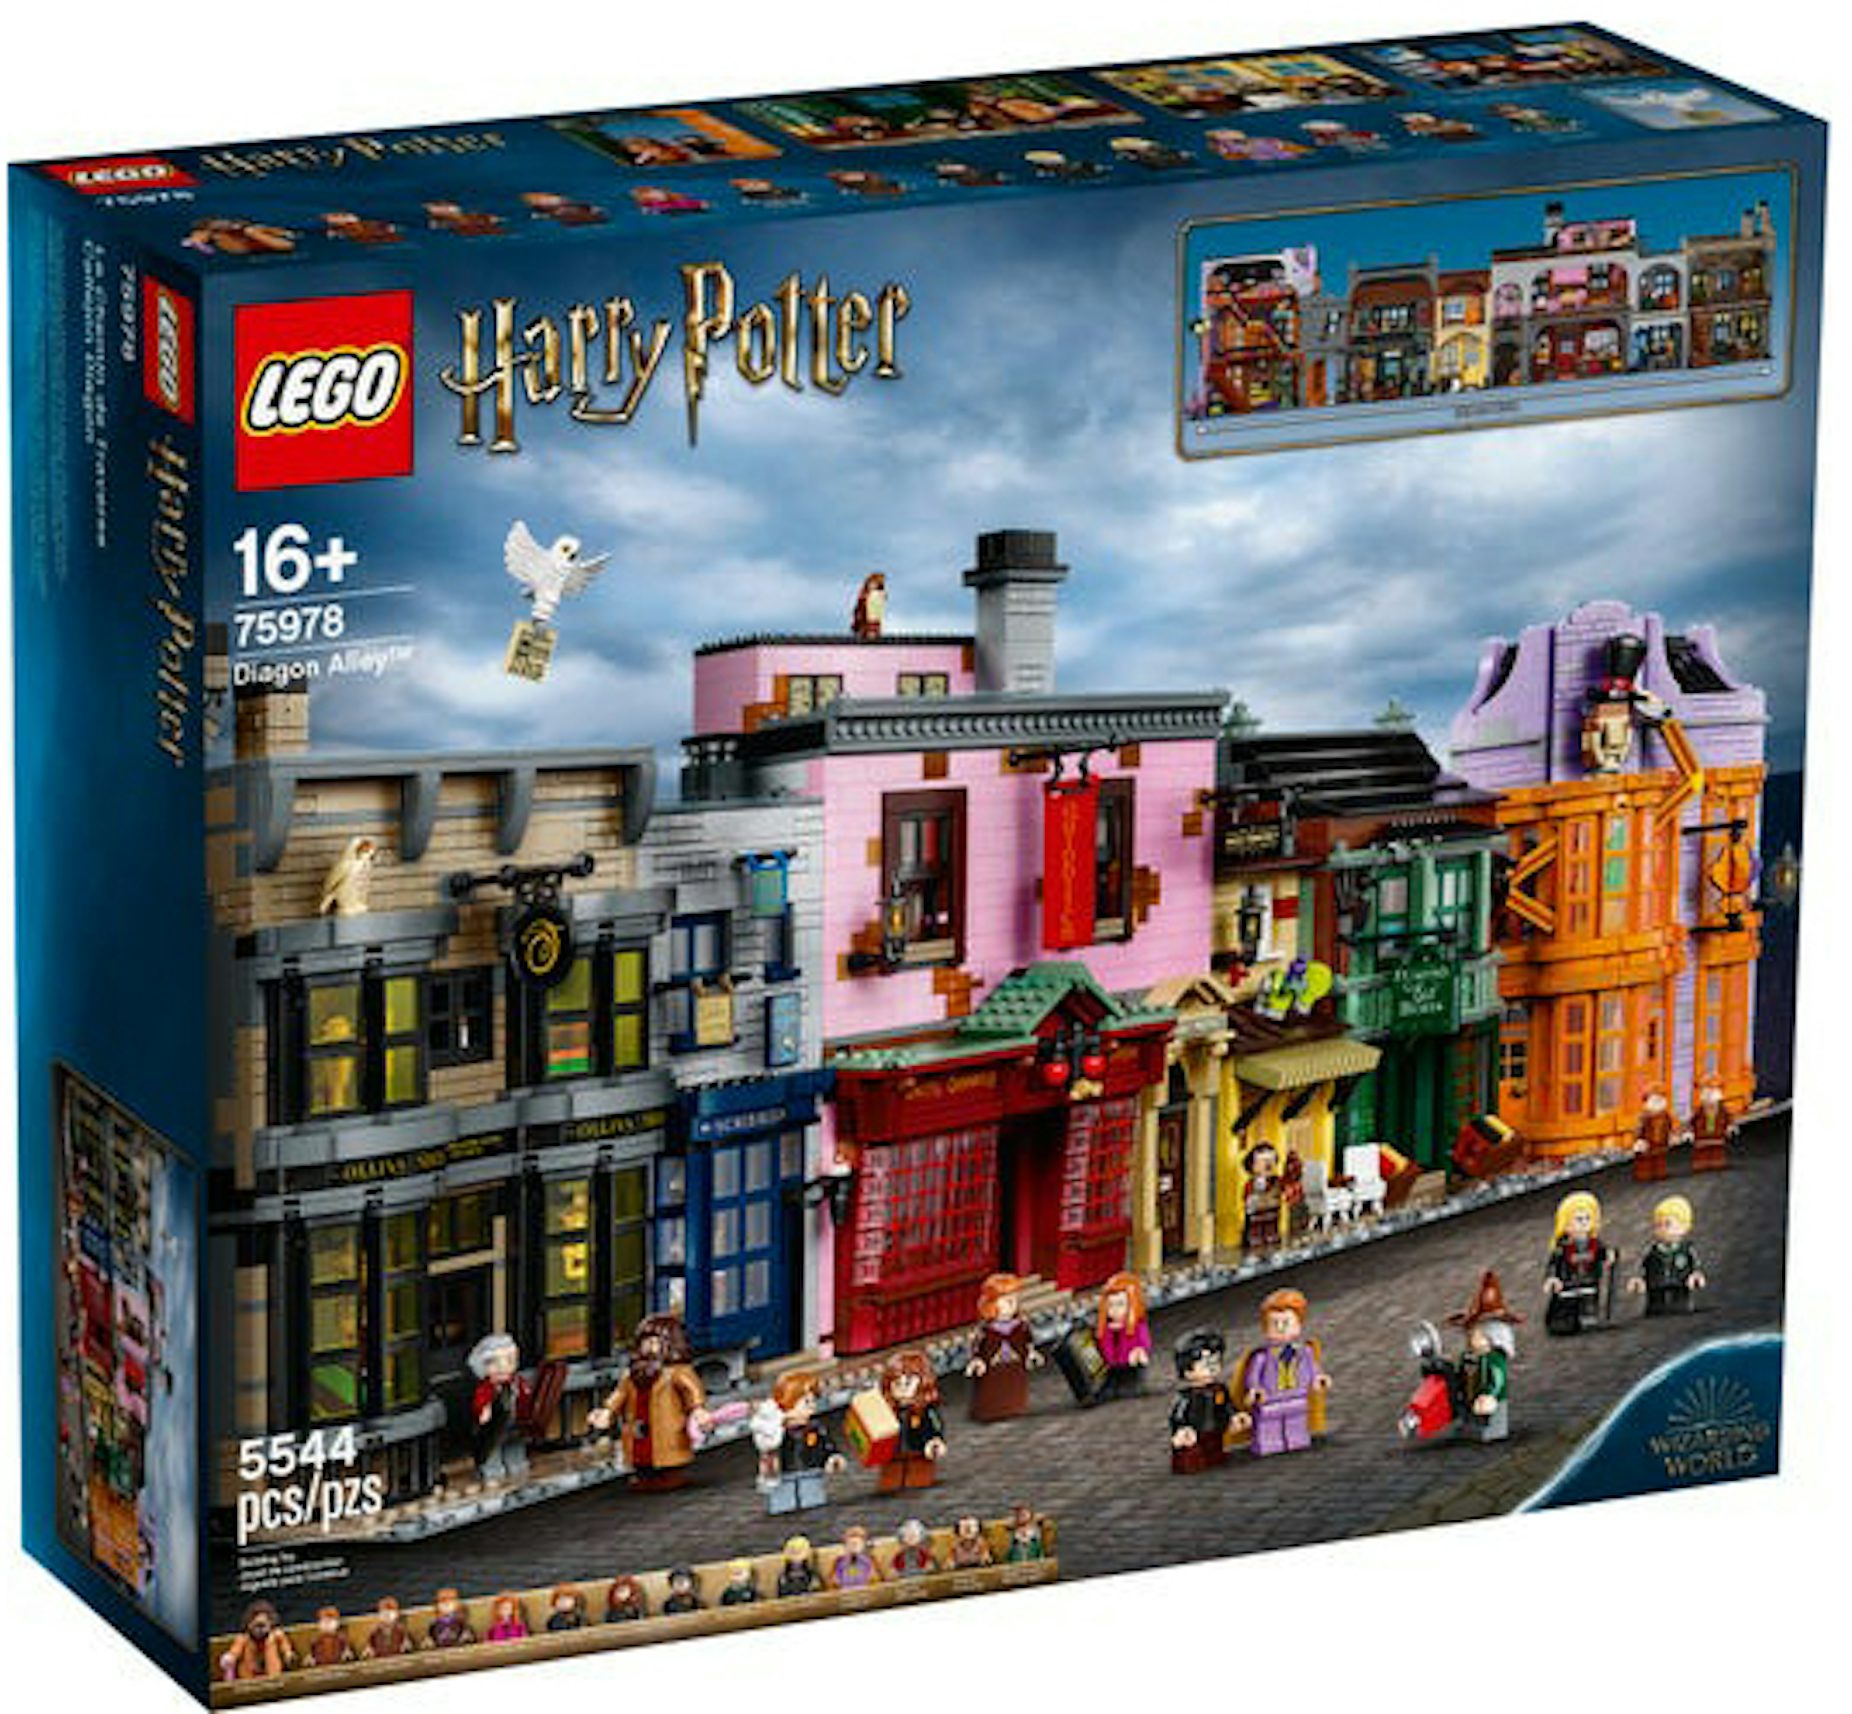 https://images.stockx.com/images/Lego-Diagon-Alley-Set-75978.jpg?fit=fill&bg=FFFFFF&w=1200&h=857&fm=jpg&auto=compress&dpr=2&trim=color&updated_at=1611070368&q=60